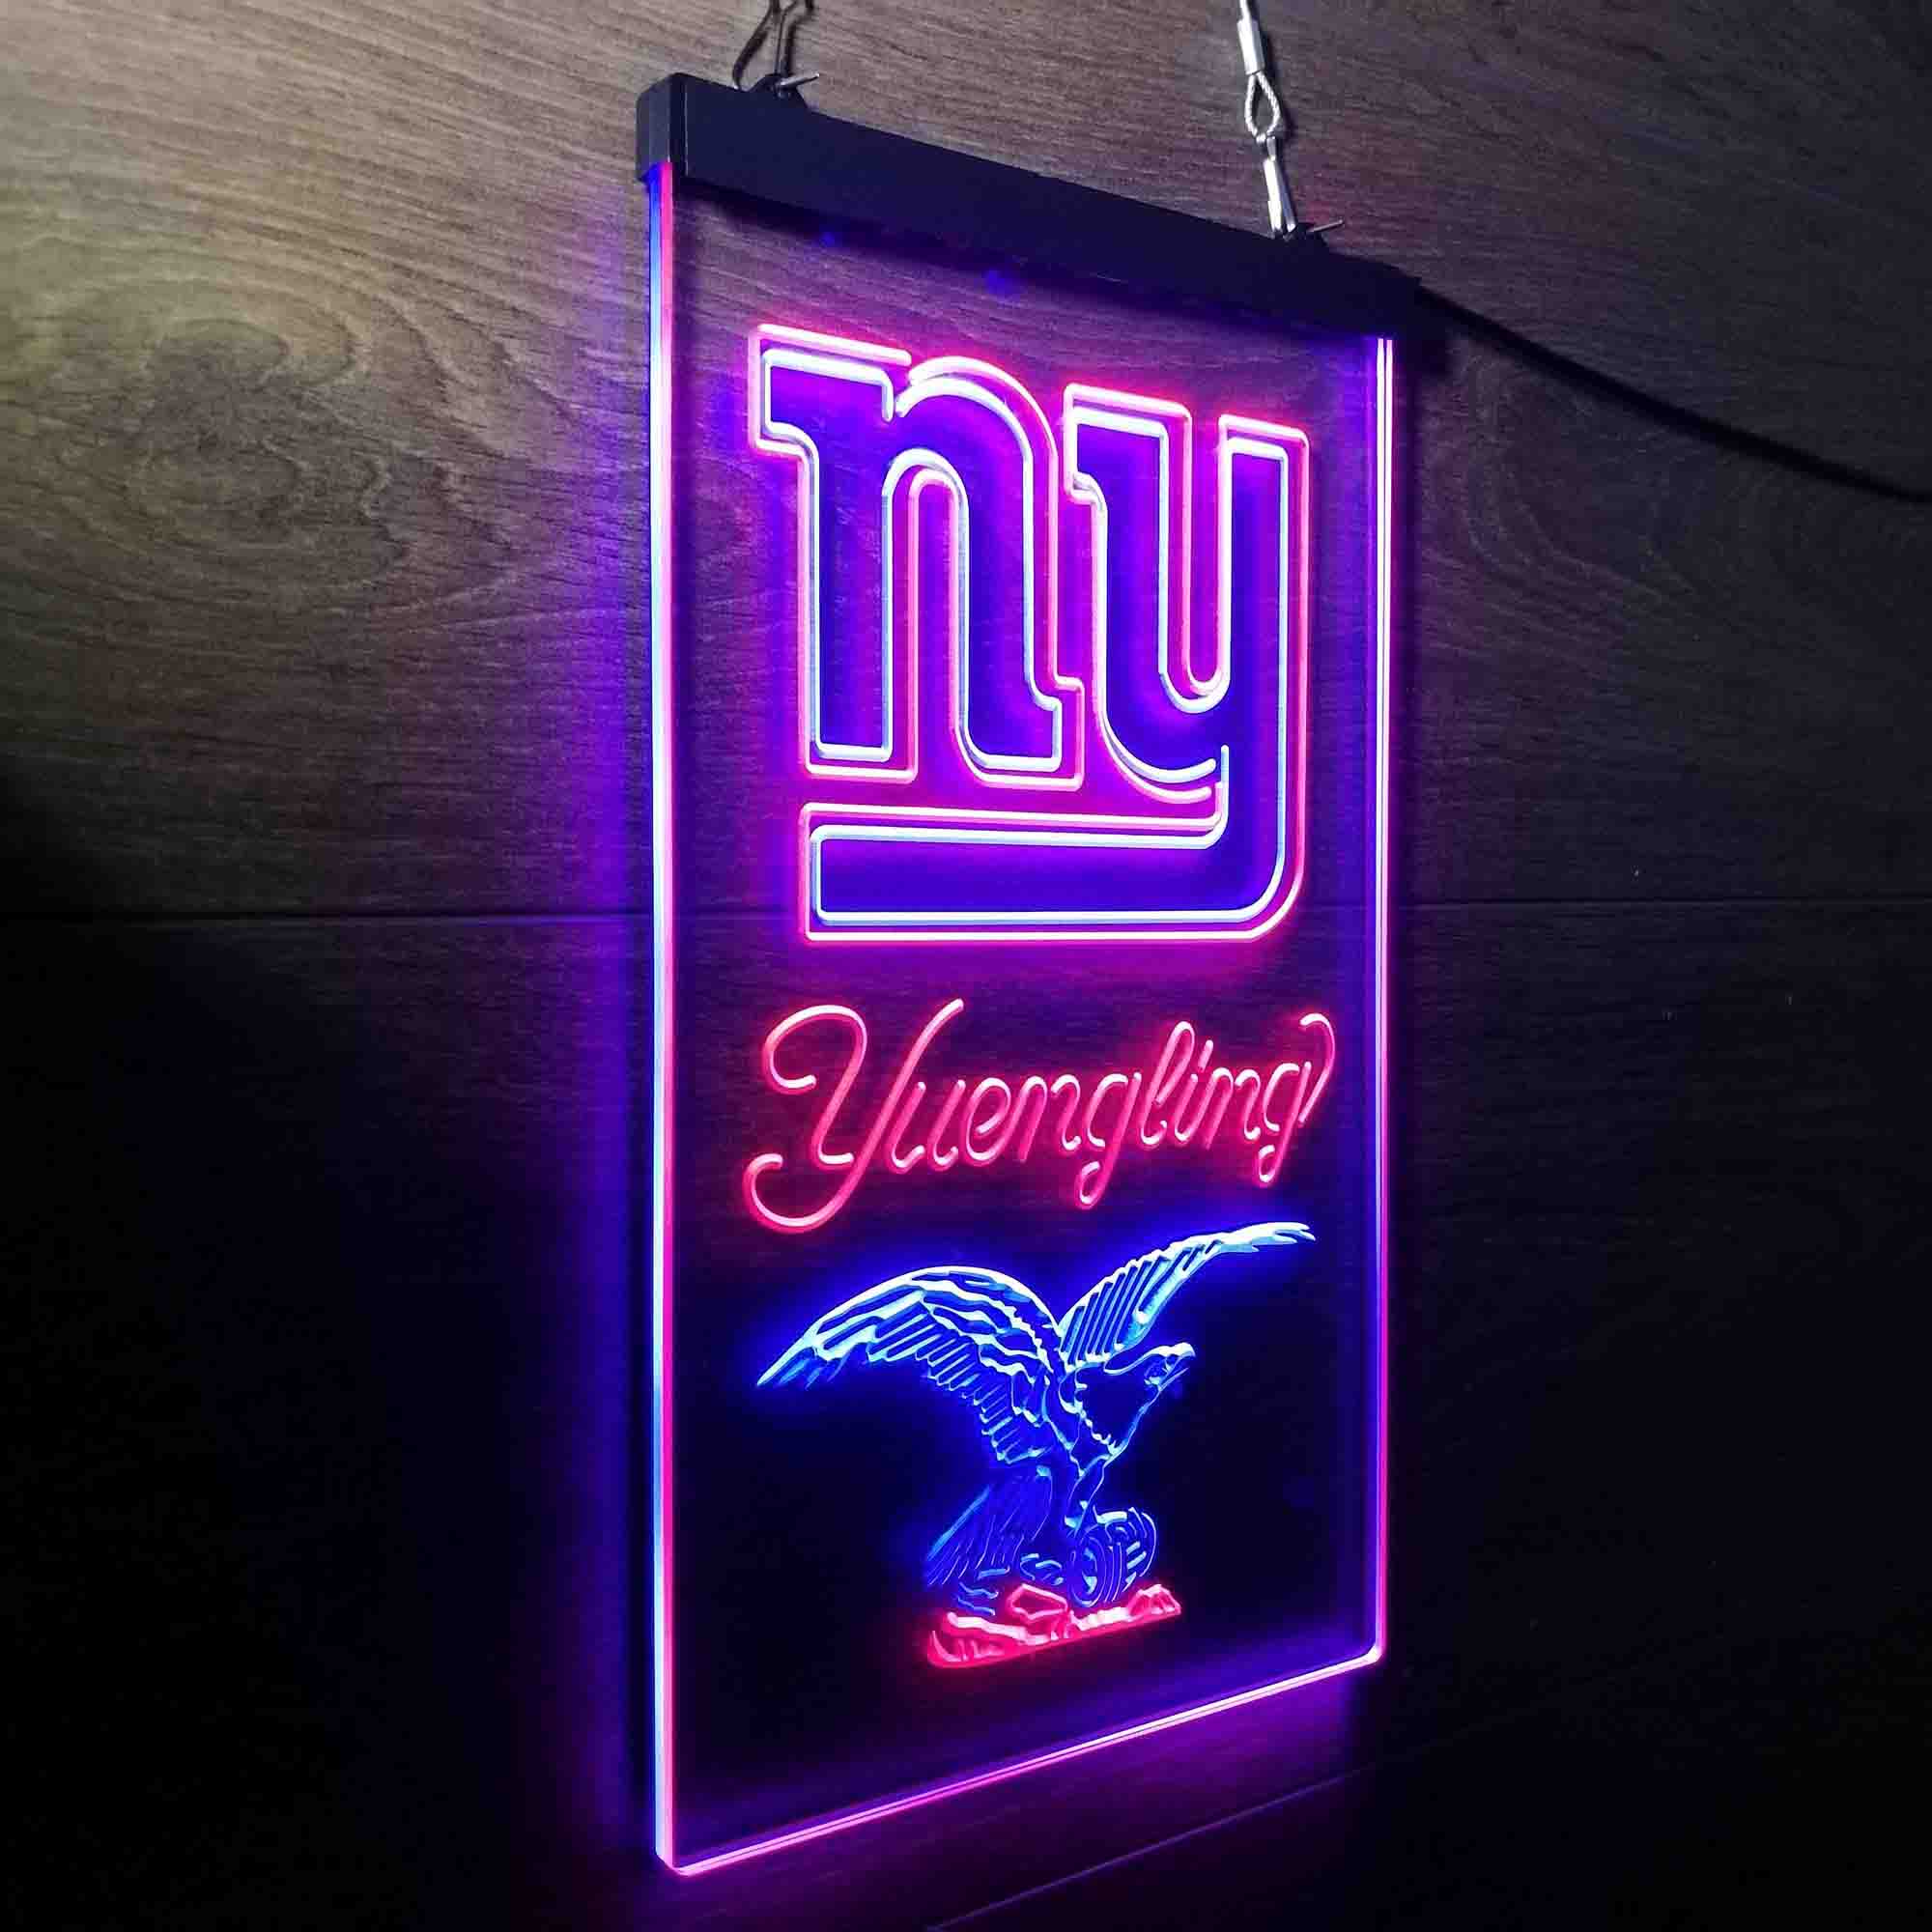 Yuengling Bar New York Giants Est. 1925 Neon-Like LED Sign